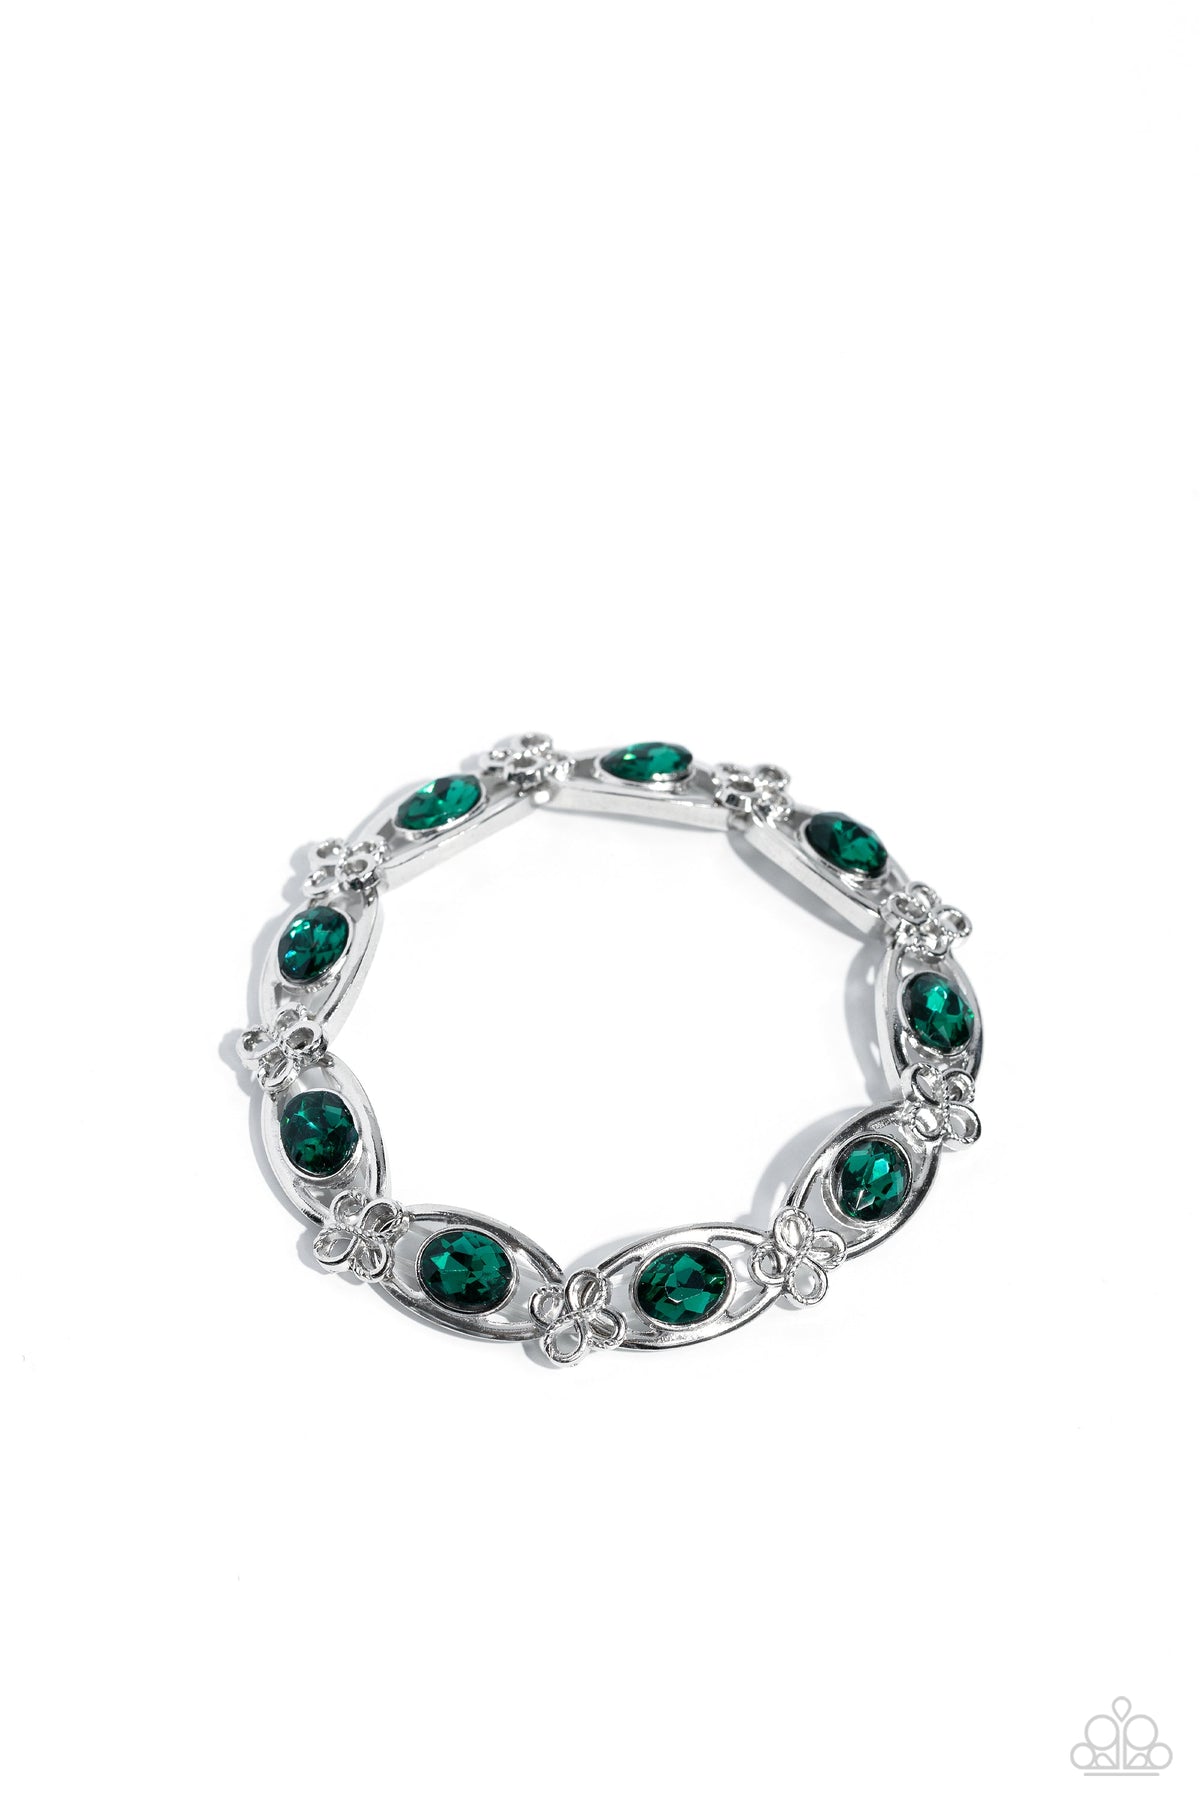 Infinite Impression Green Rhinestone Bracelet - Paparazzi Accessories- lightbox - CarasShop.com - $5 Jewelry by Cara Jewels